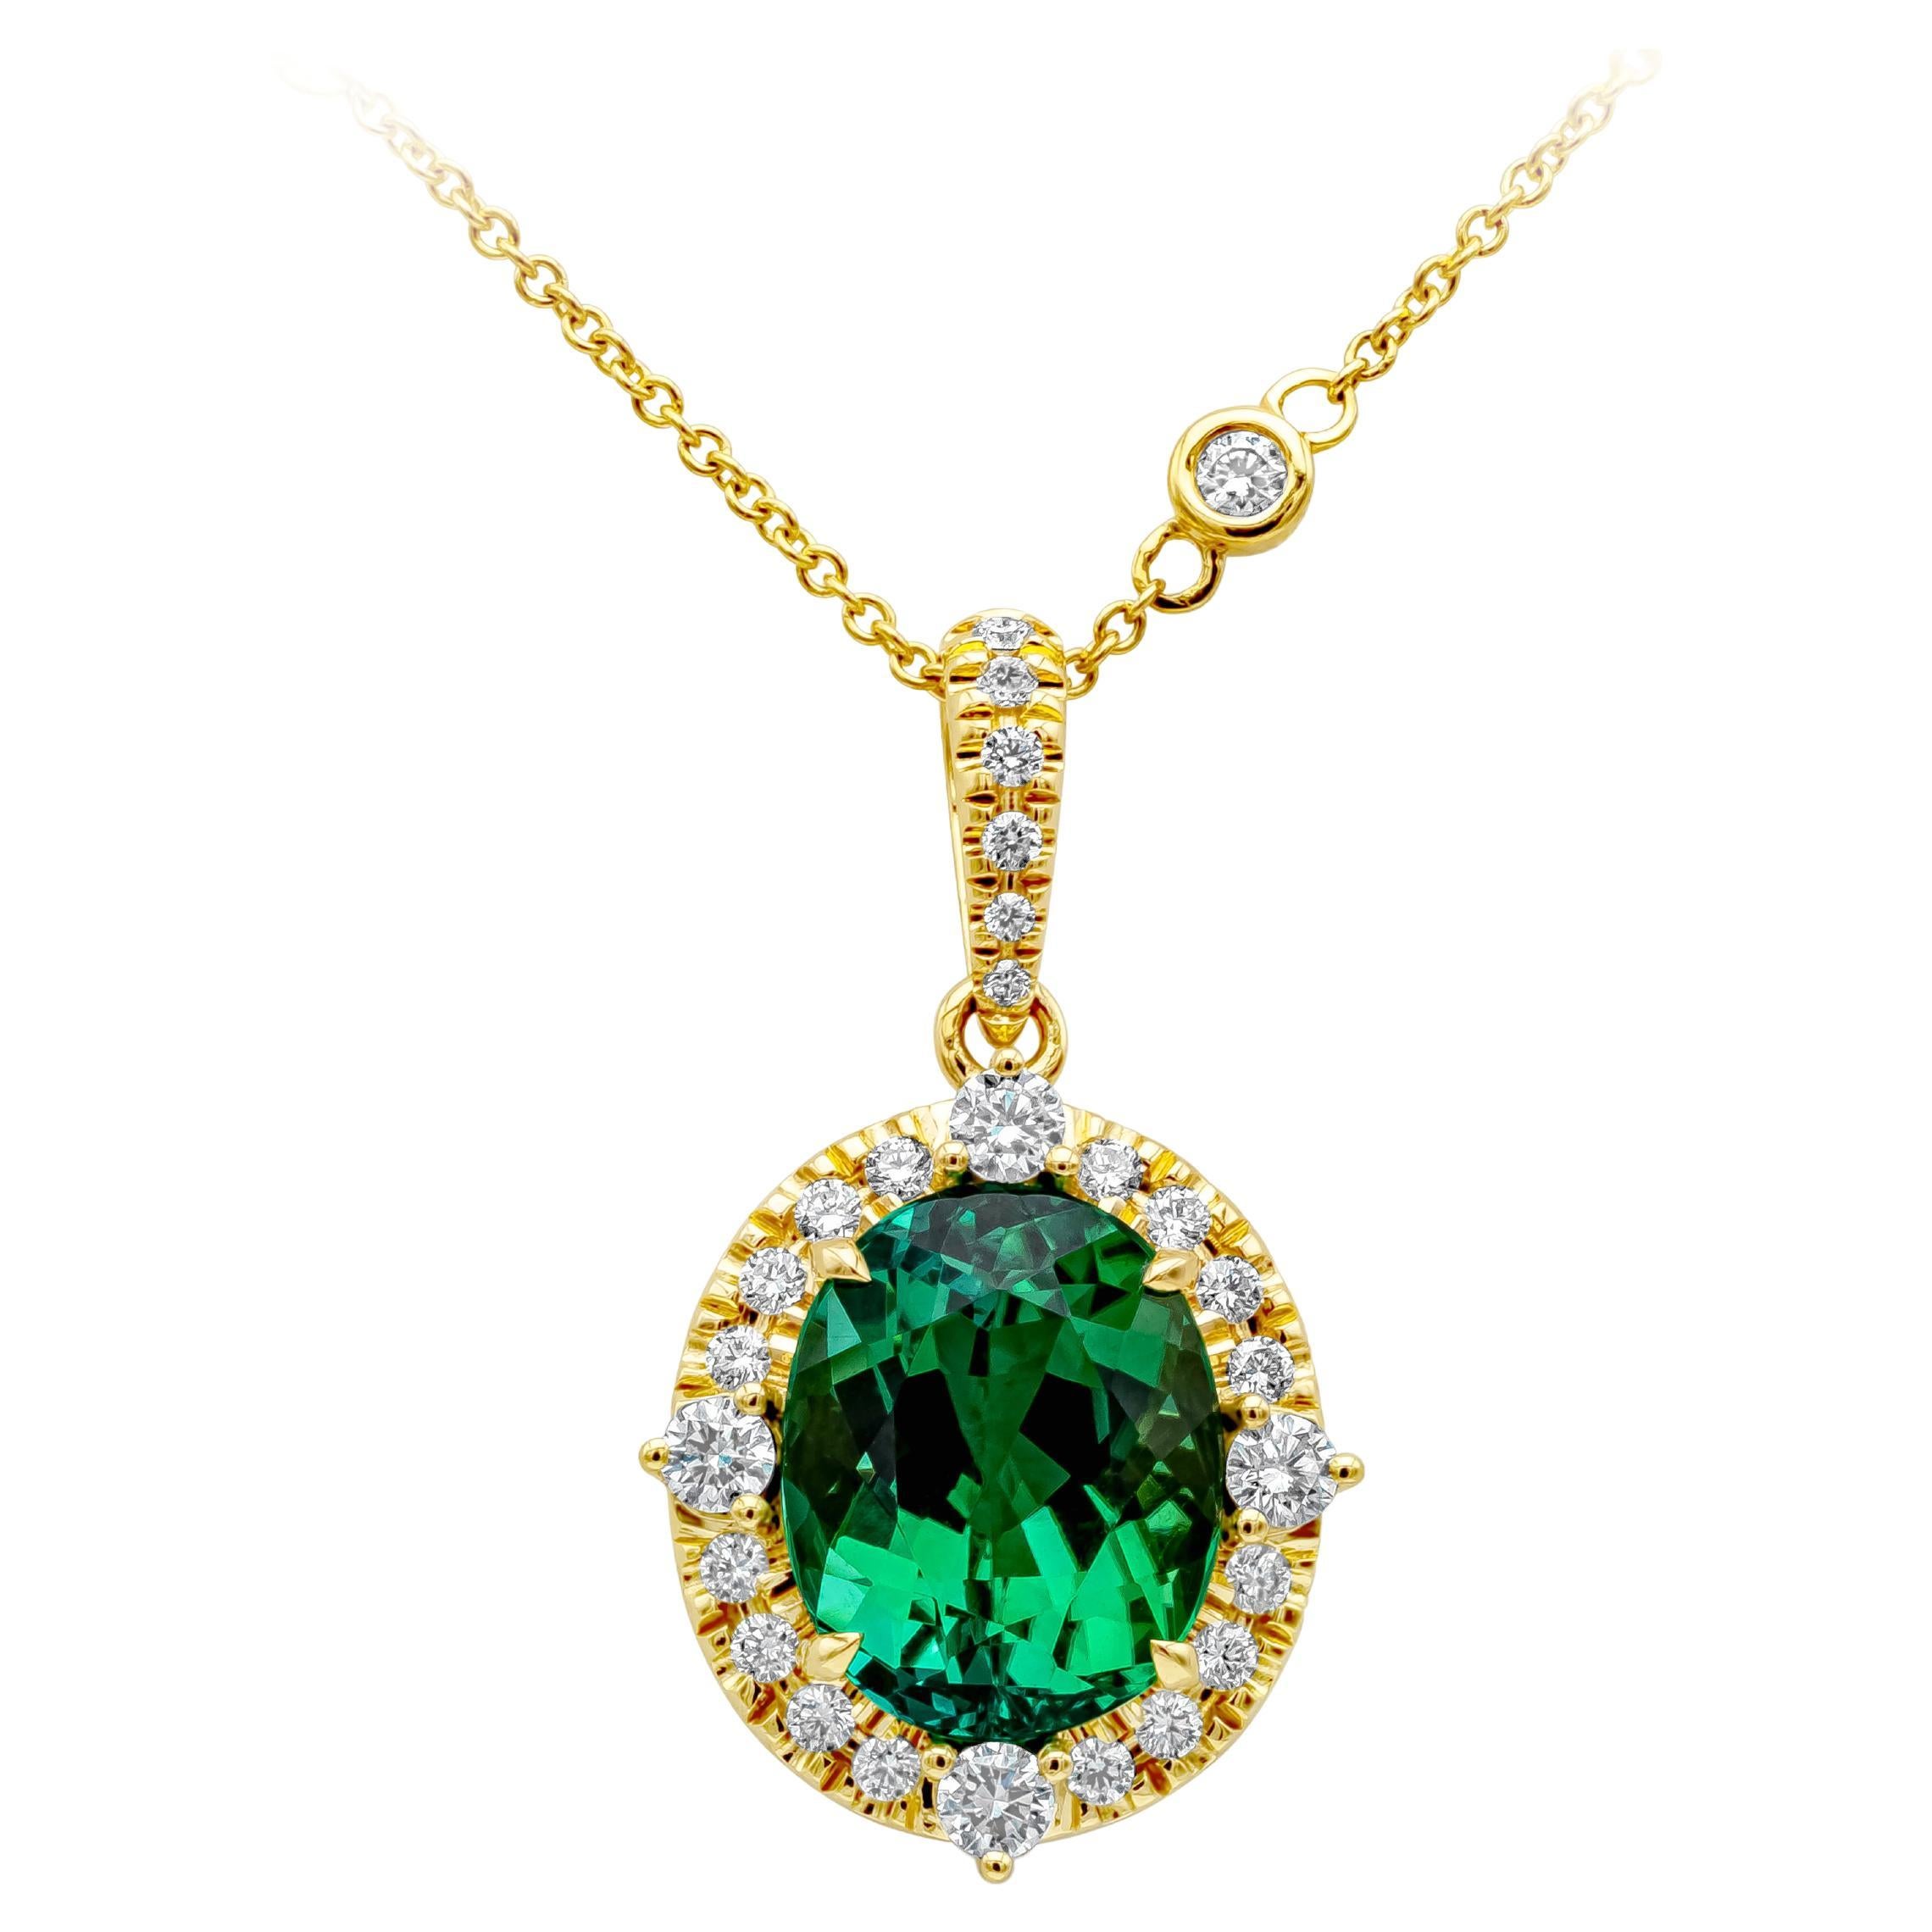 4.92 Carat Oval Cut Green Tourmaline and Diamond Pendant Necklace For Sale